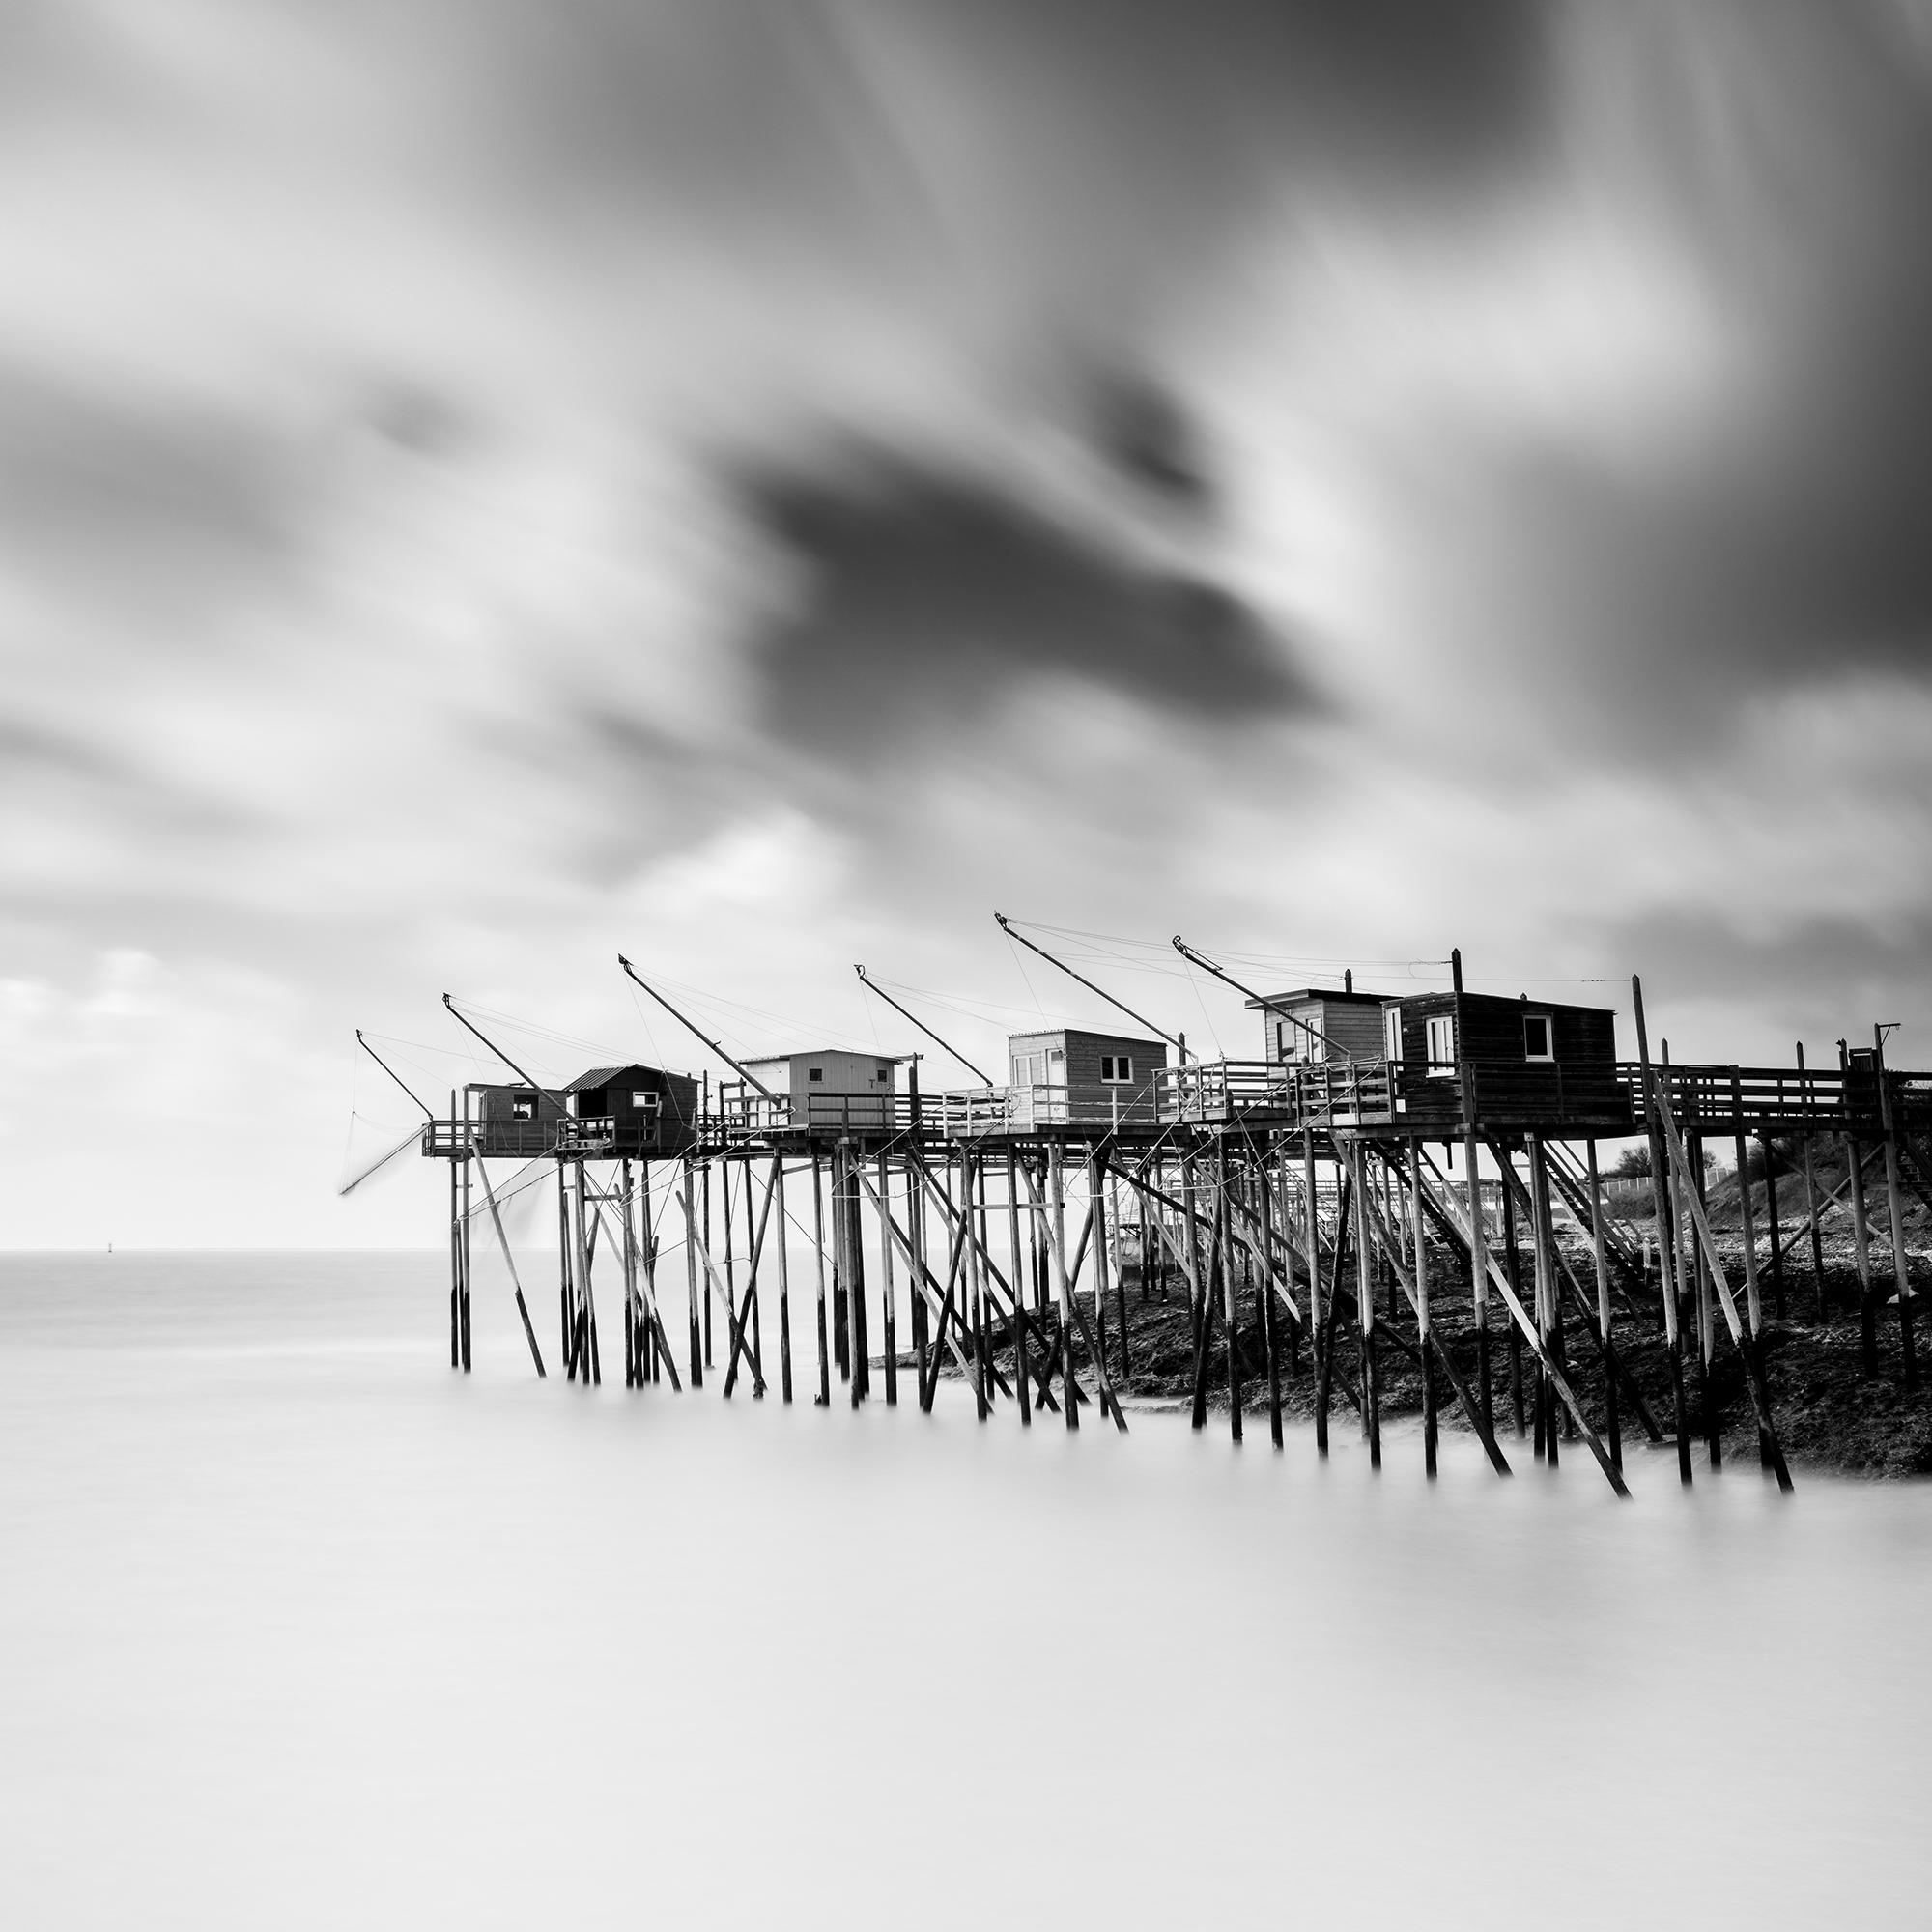 Fishing Hut on Stilts, Carrelet, Atlanic Coast, b&w art landscape photography For Sale 3